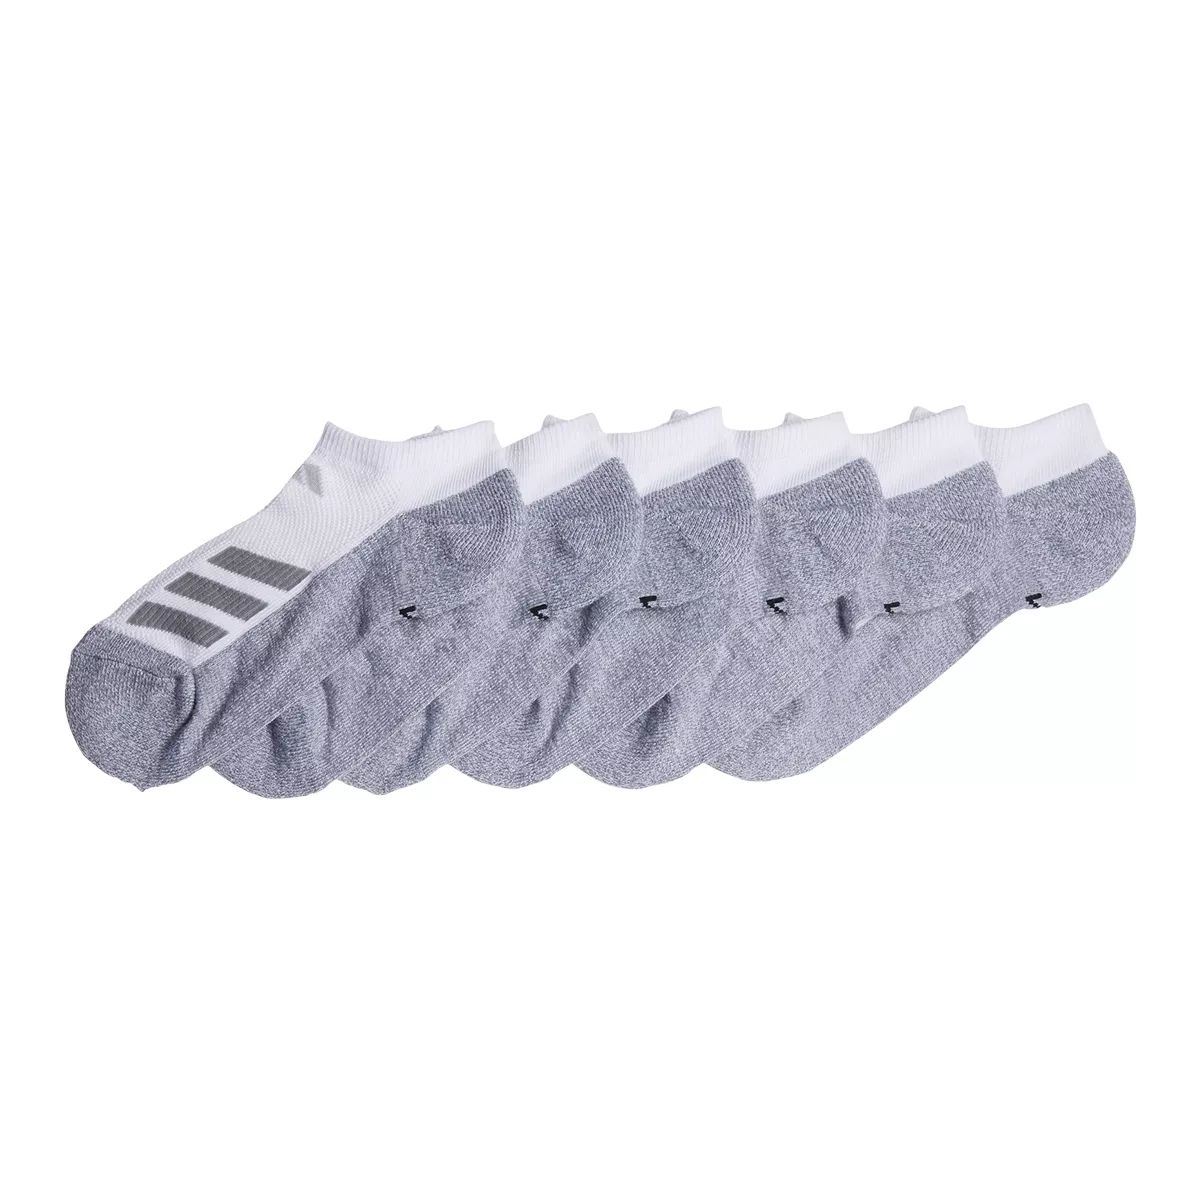 adidas Youth Angle Stripe Cushion No Show Socks - 6 Pack